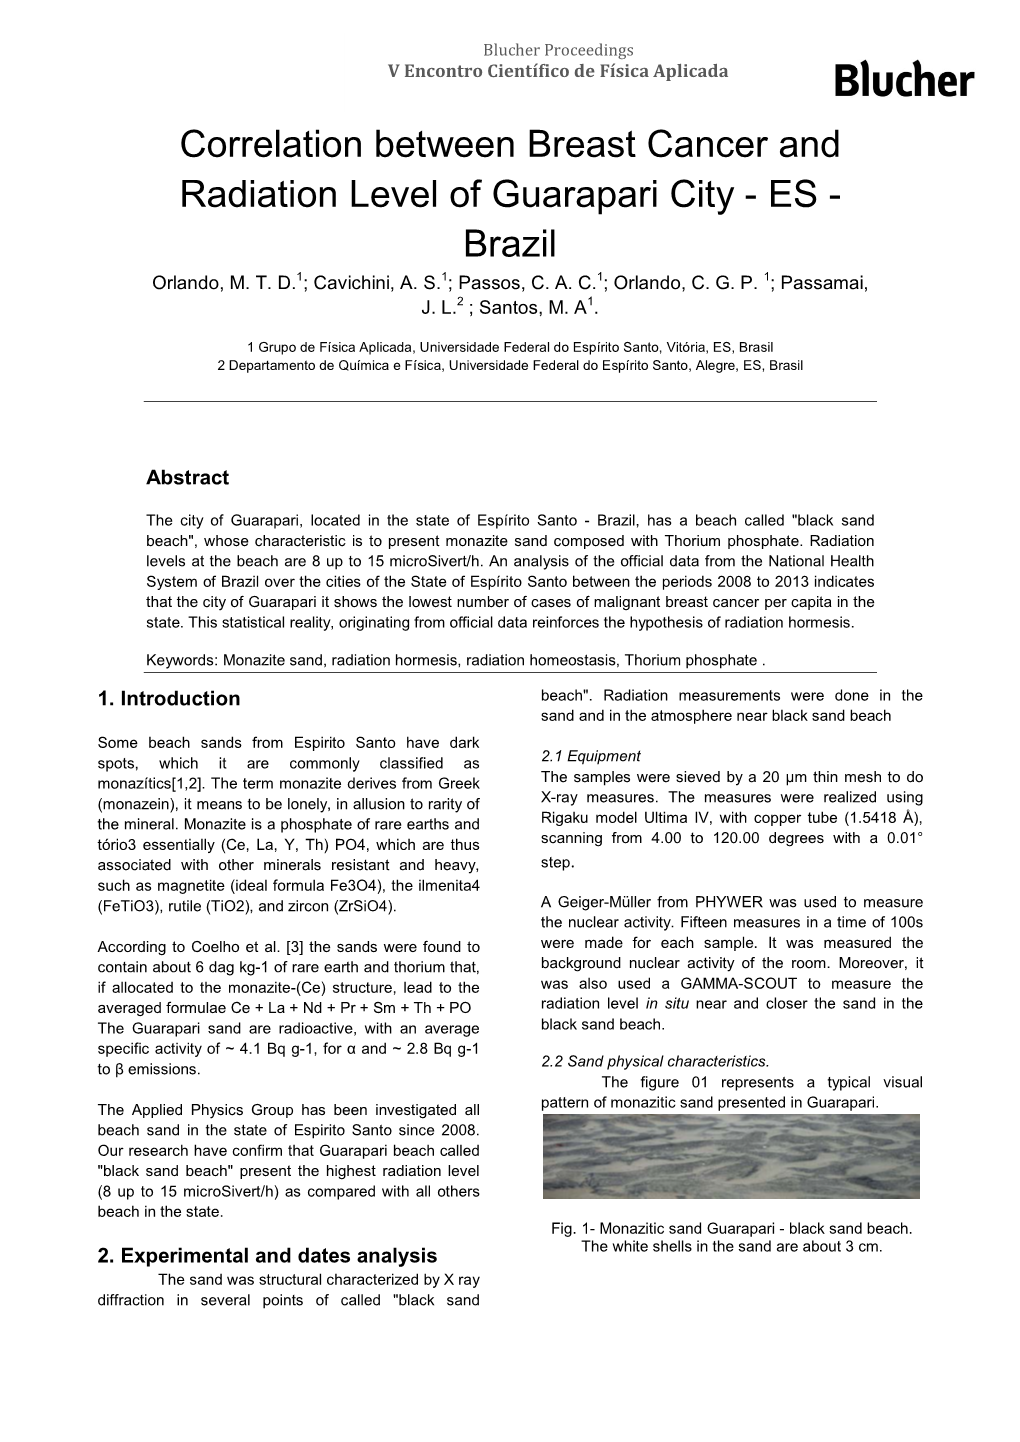 Correlation Between Breast Cancer and Radiation Level of Guarapari City - ES - Brazil Orlando, M